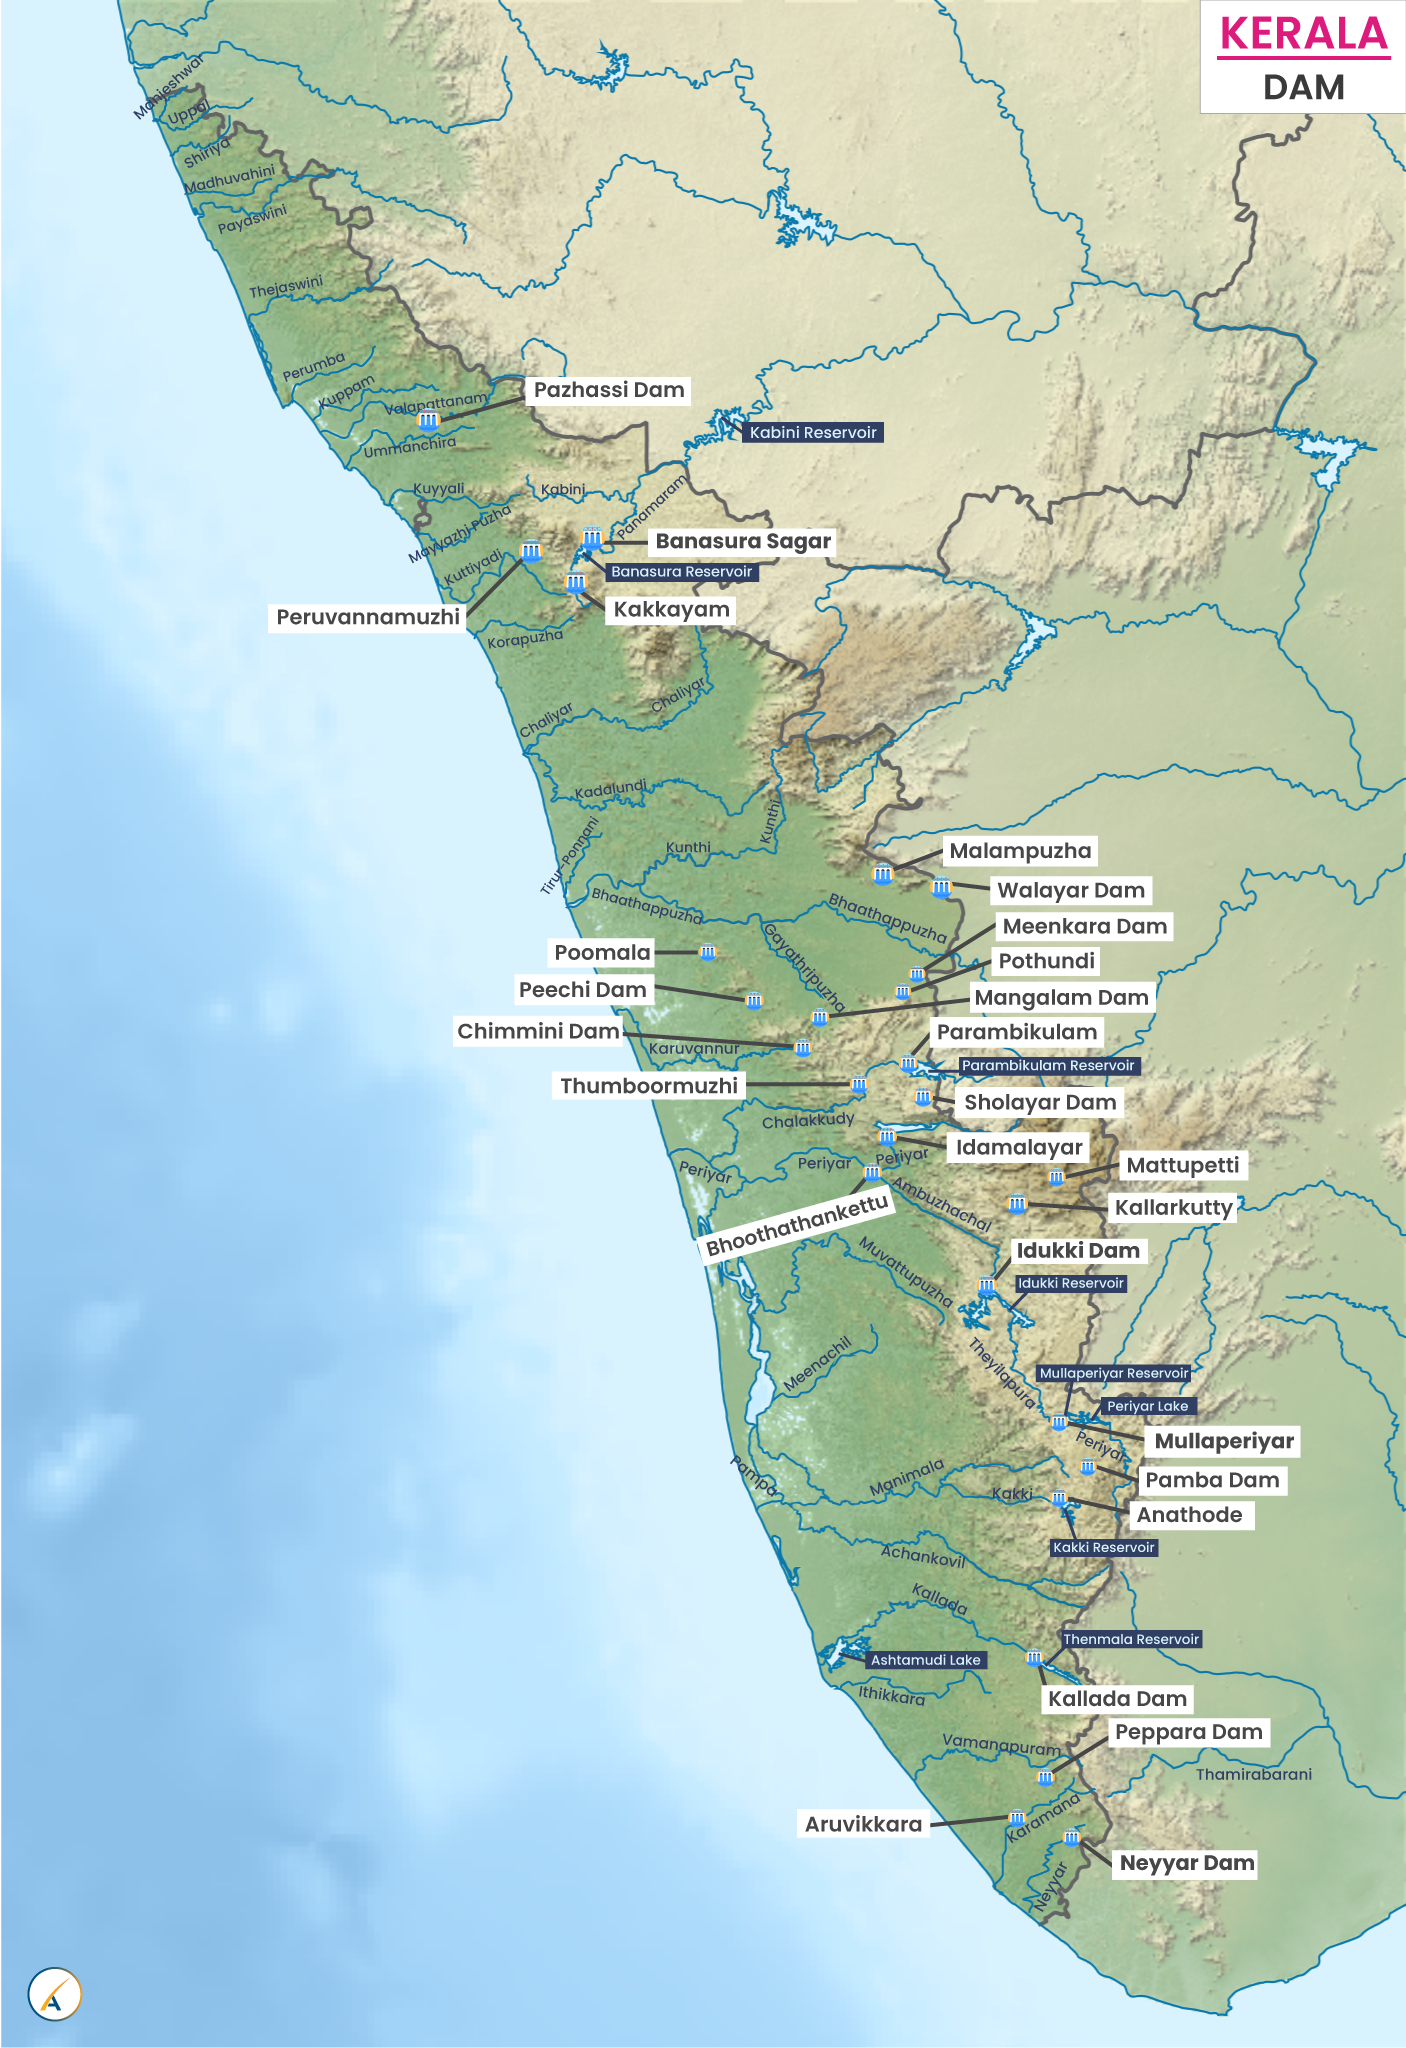 Major Dams in Kerala (Map)